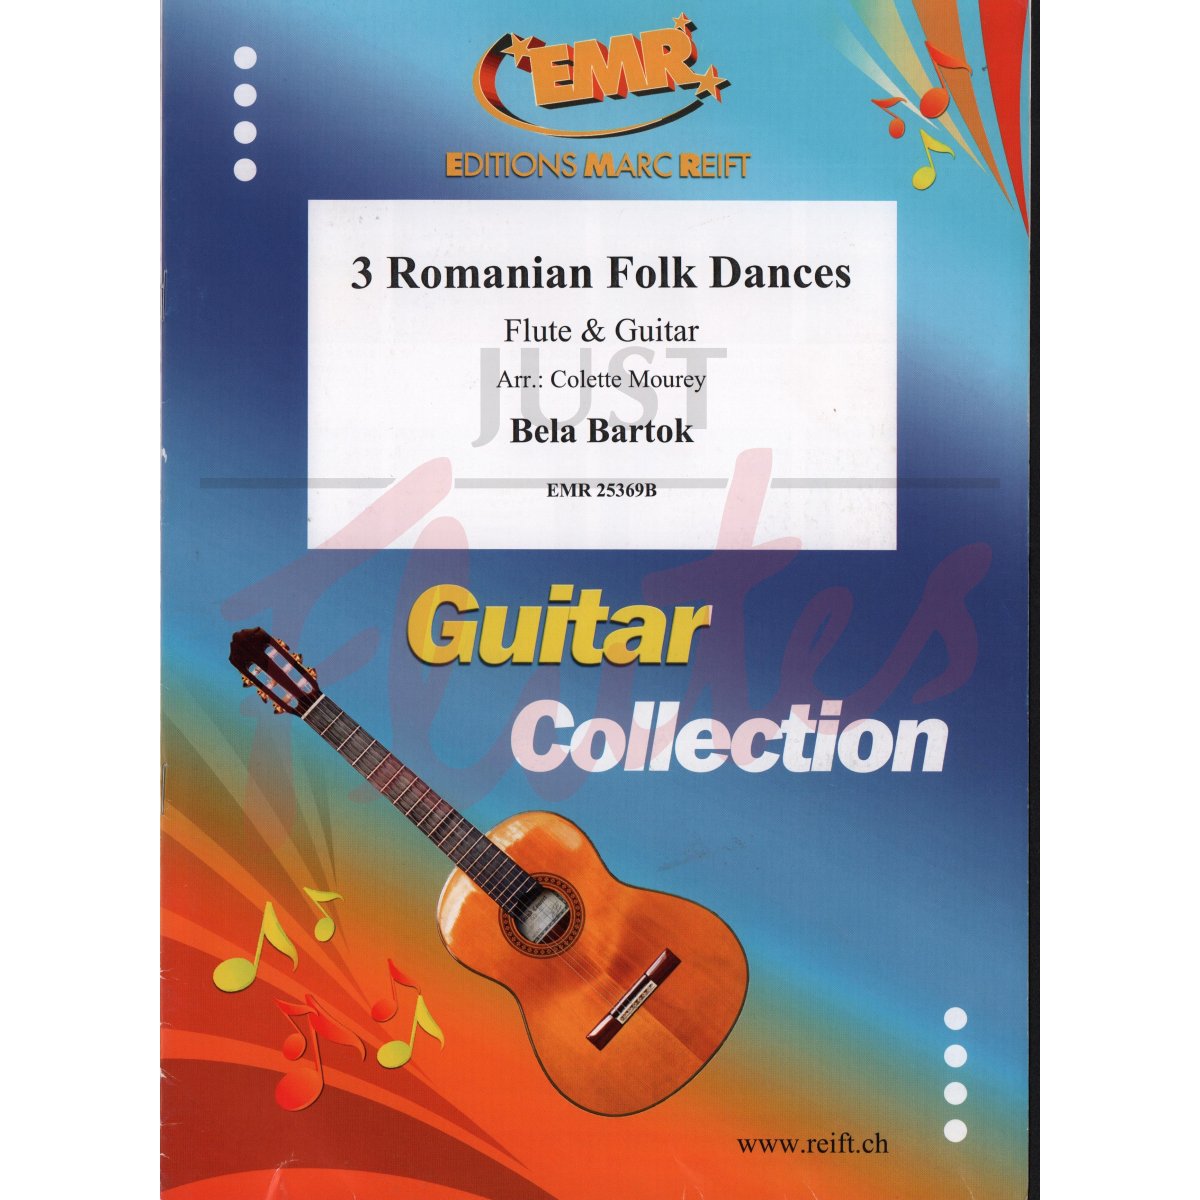 3 Romanian Folk Dances for Flute and Guitar